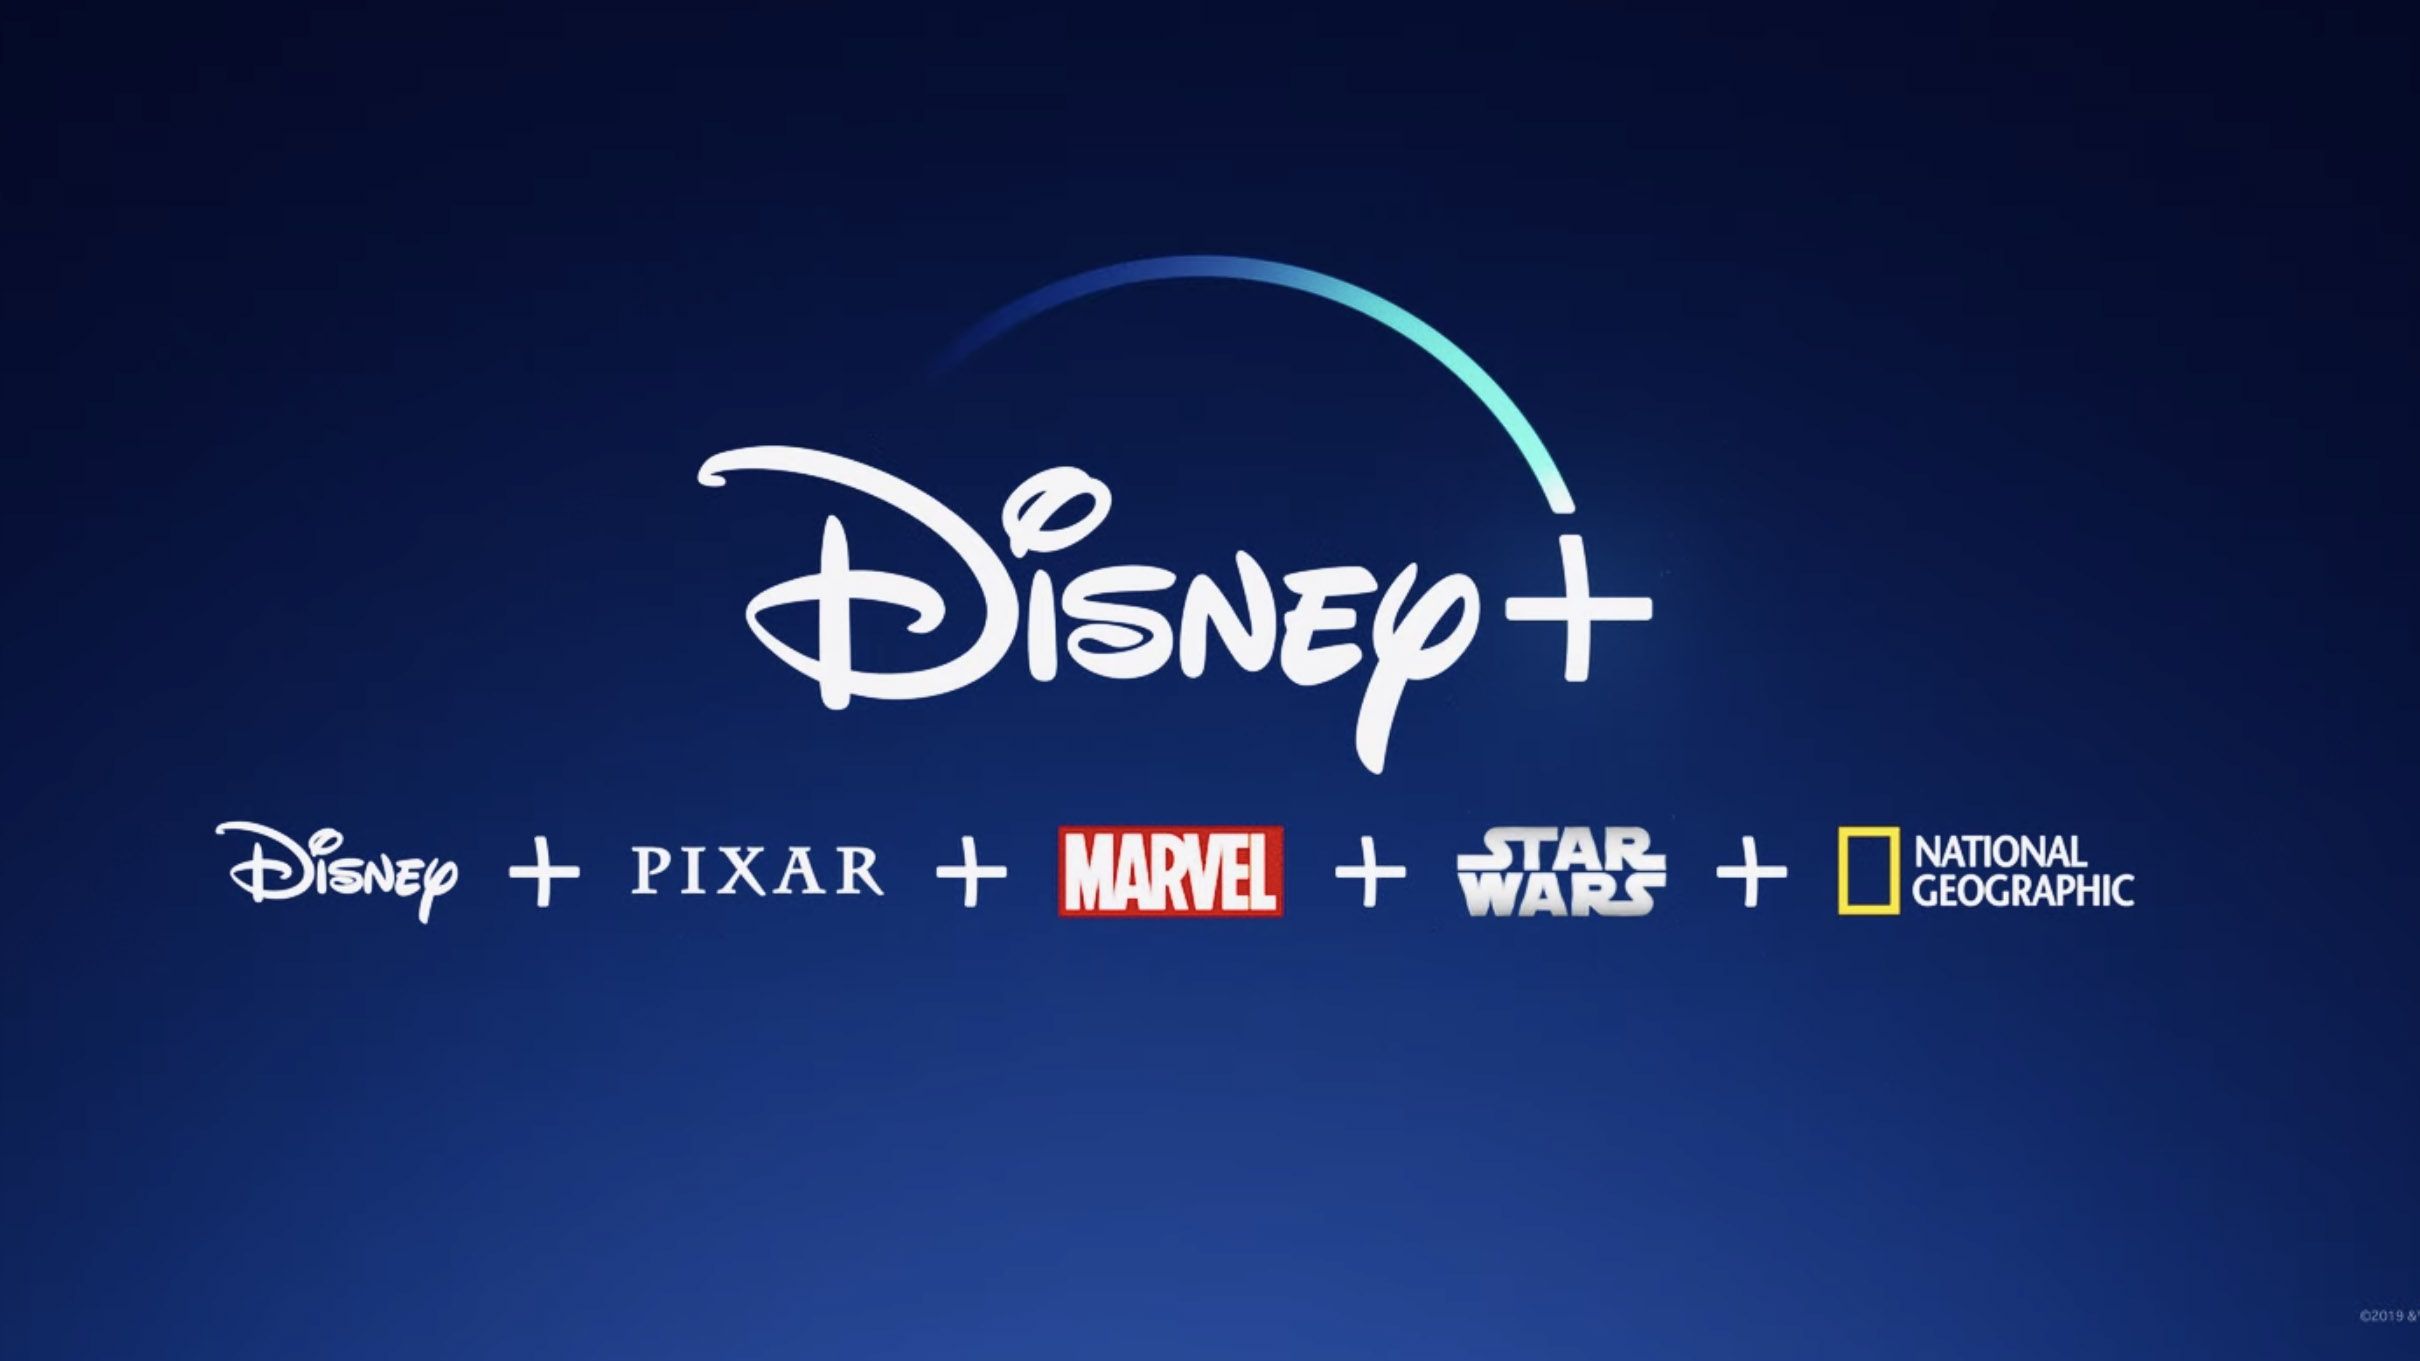 Bluey' Season 3 Release Date on Disney+ — Where to Watch New